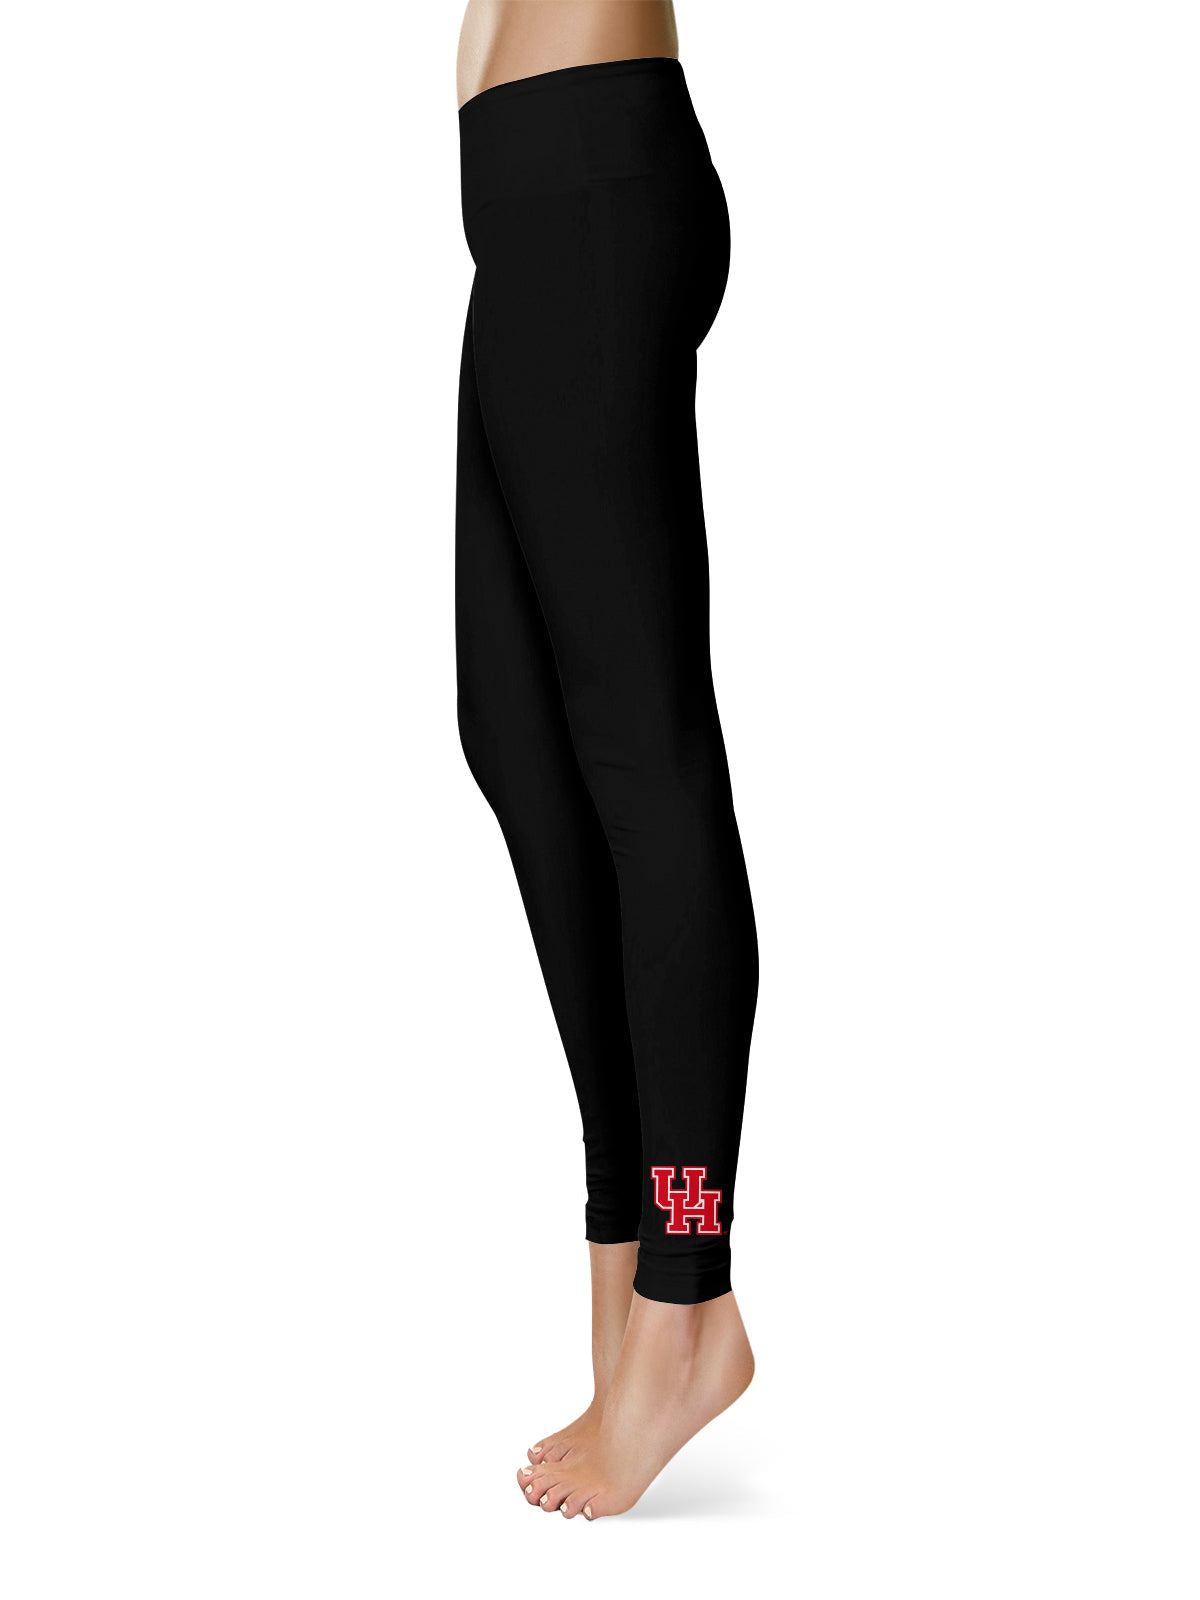 University of Houston Cougars Vive La Fete Game Day Collegiate Logo at Ankle Women Black Yoga Leggings 2.5 Waist Tights